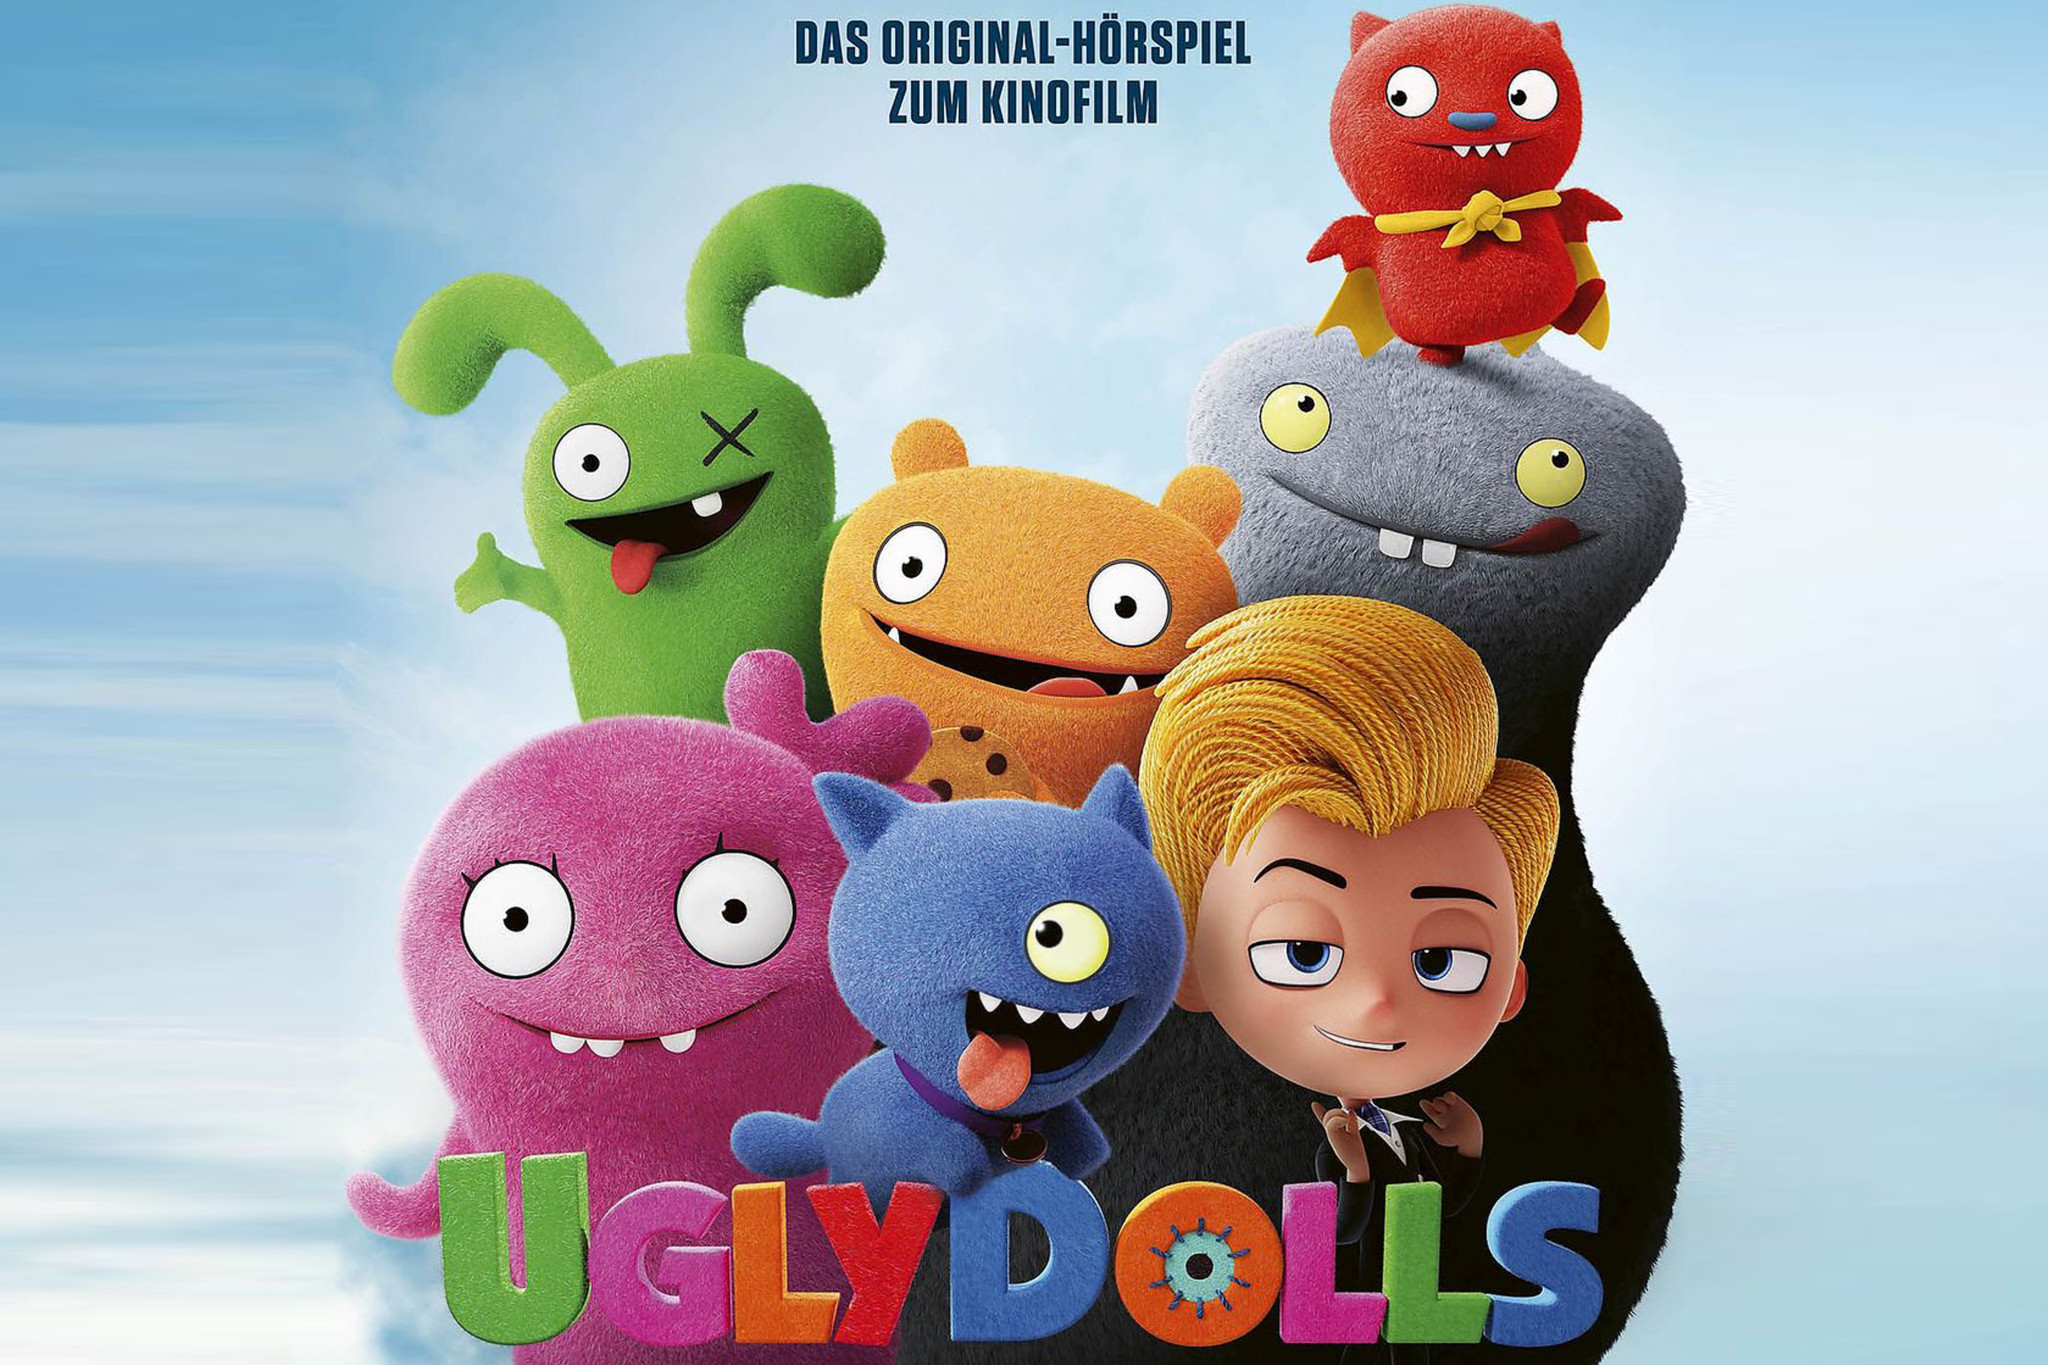 UglyDolls Hörspiel zum Kinofilm News